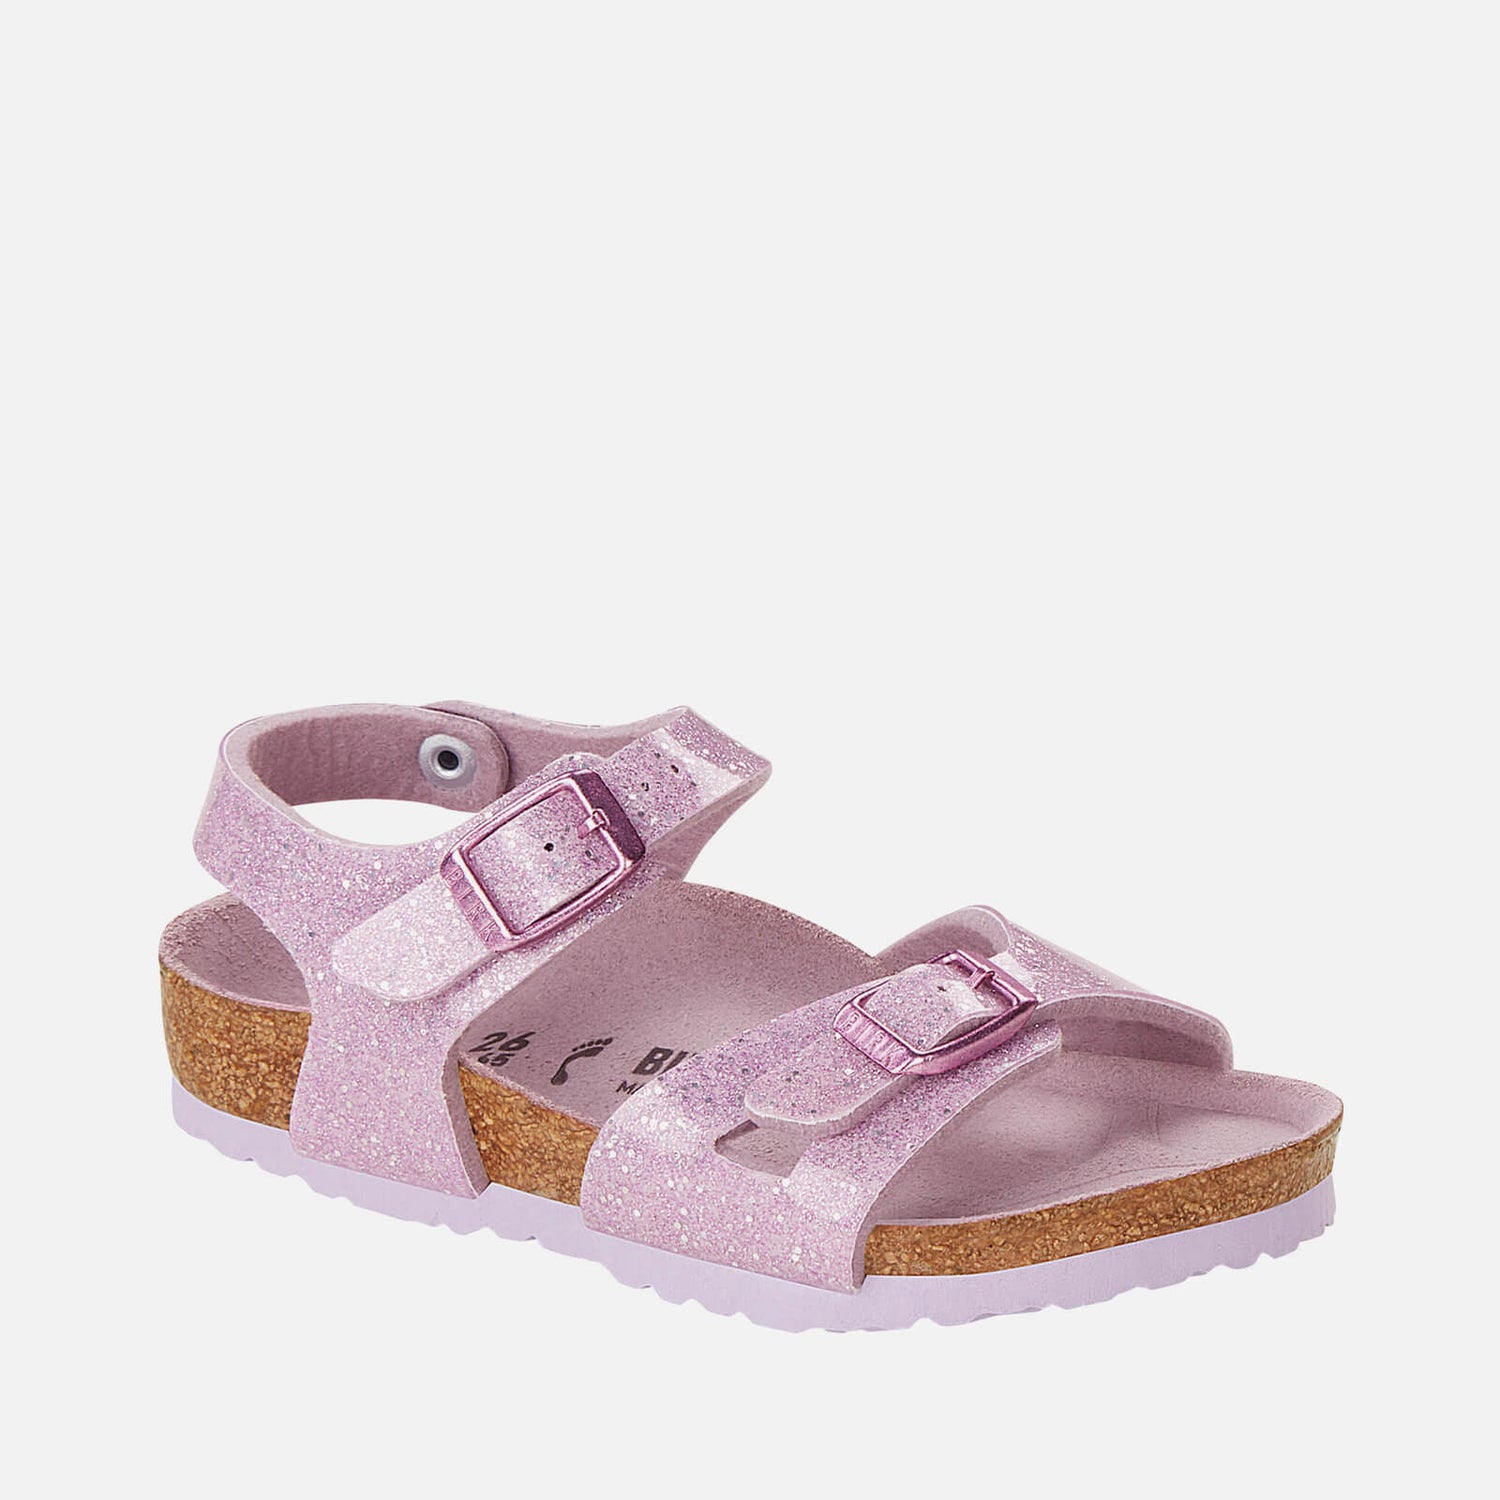 Birkenstock Kids' Rio Kids Sandals - Cosmic Sparkle Lavender